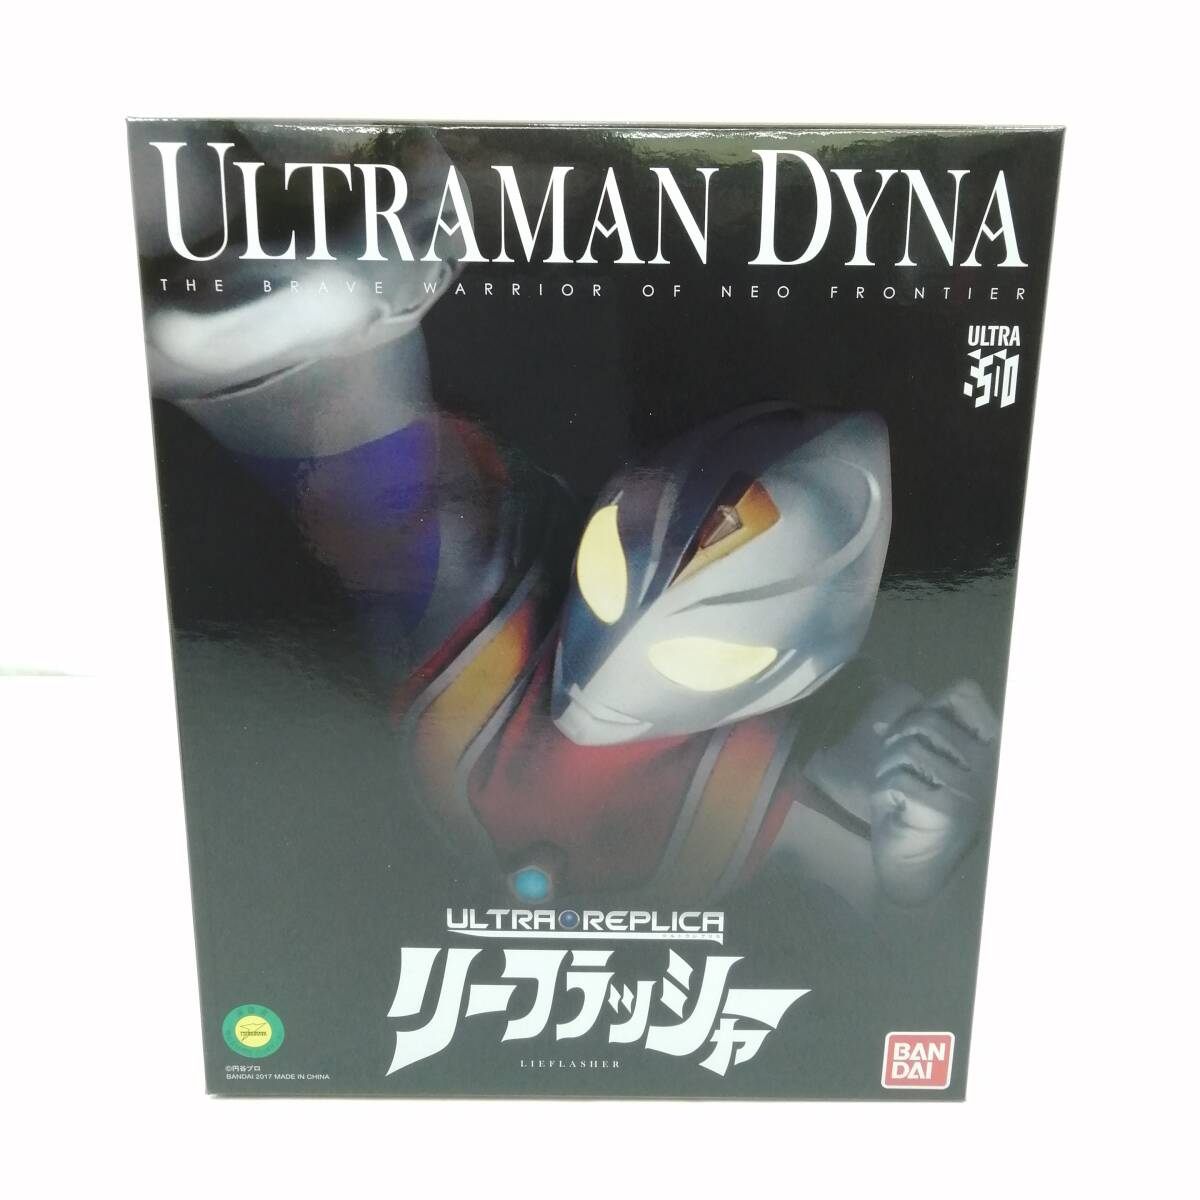 1 jpy ~ unopened # Lee flasher Ultraman Dyna 